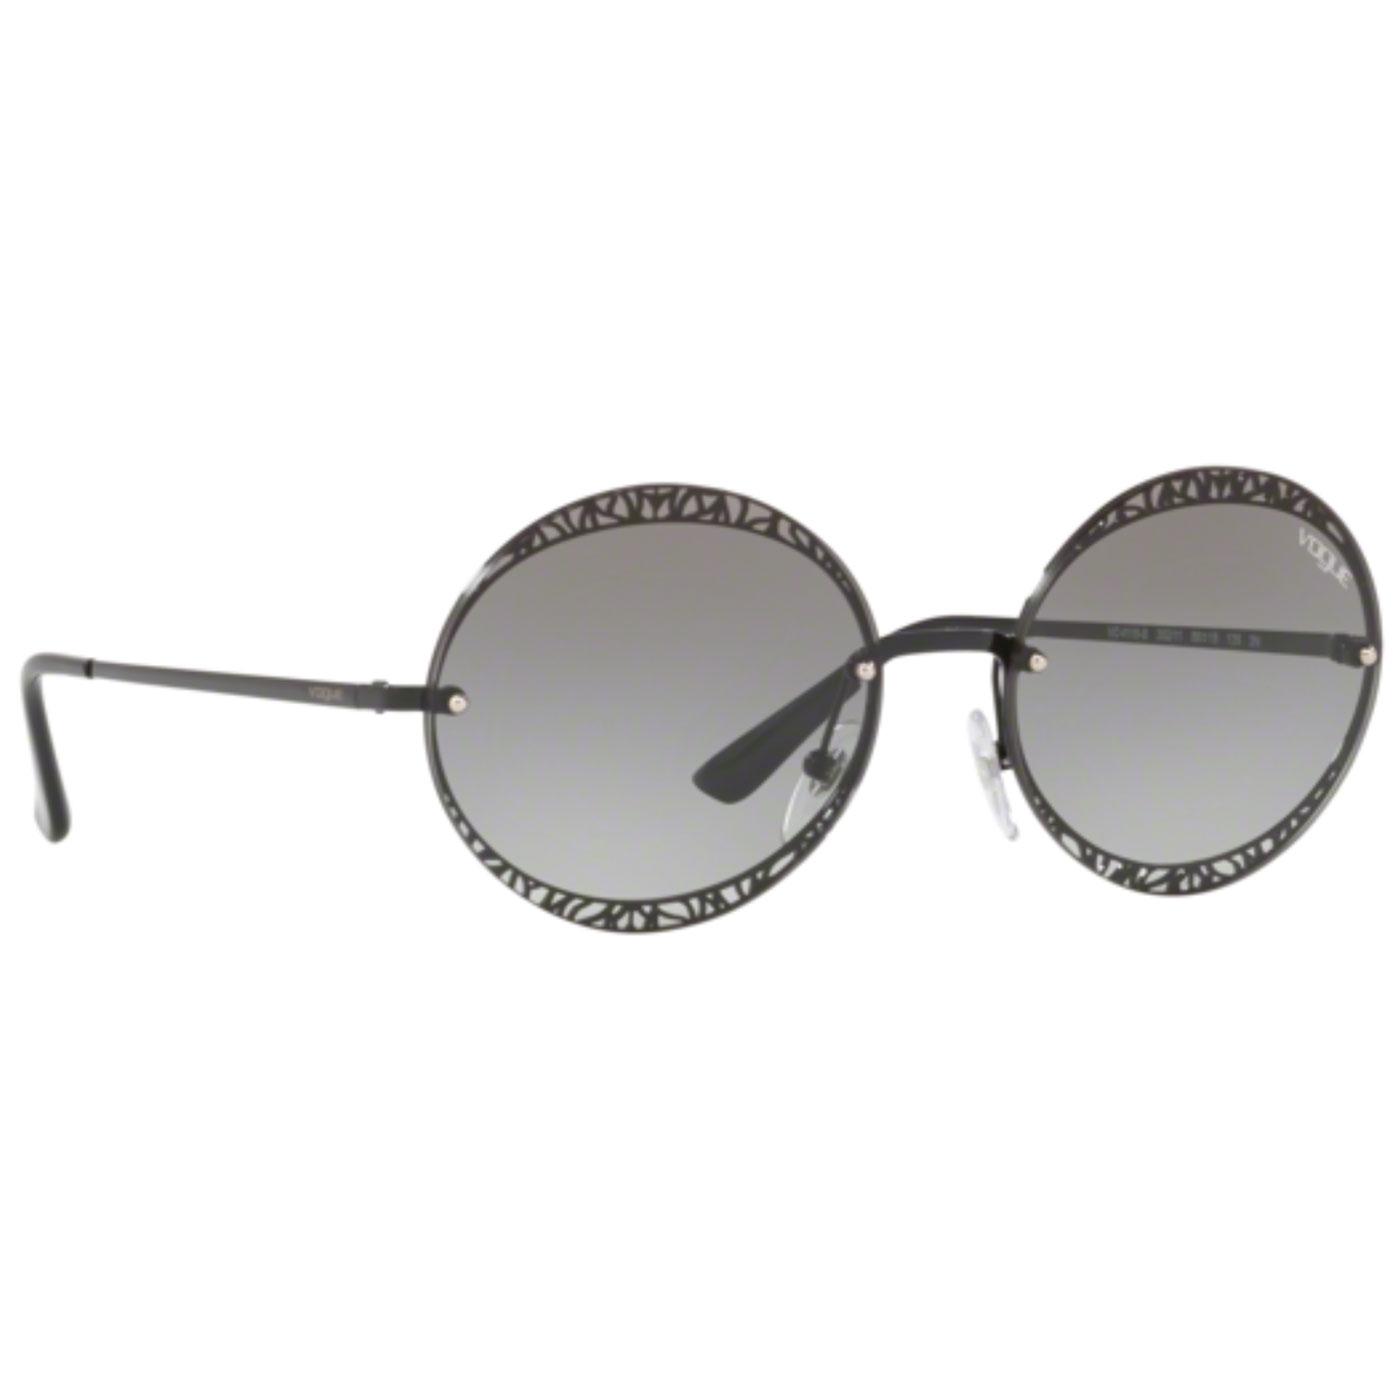 VOGUE Metallic Lace Retro 50s Round Sunglasses in Black